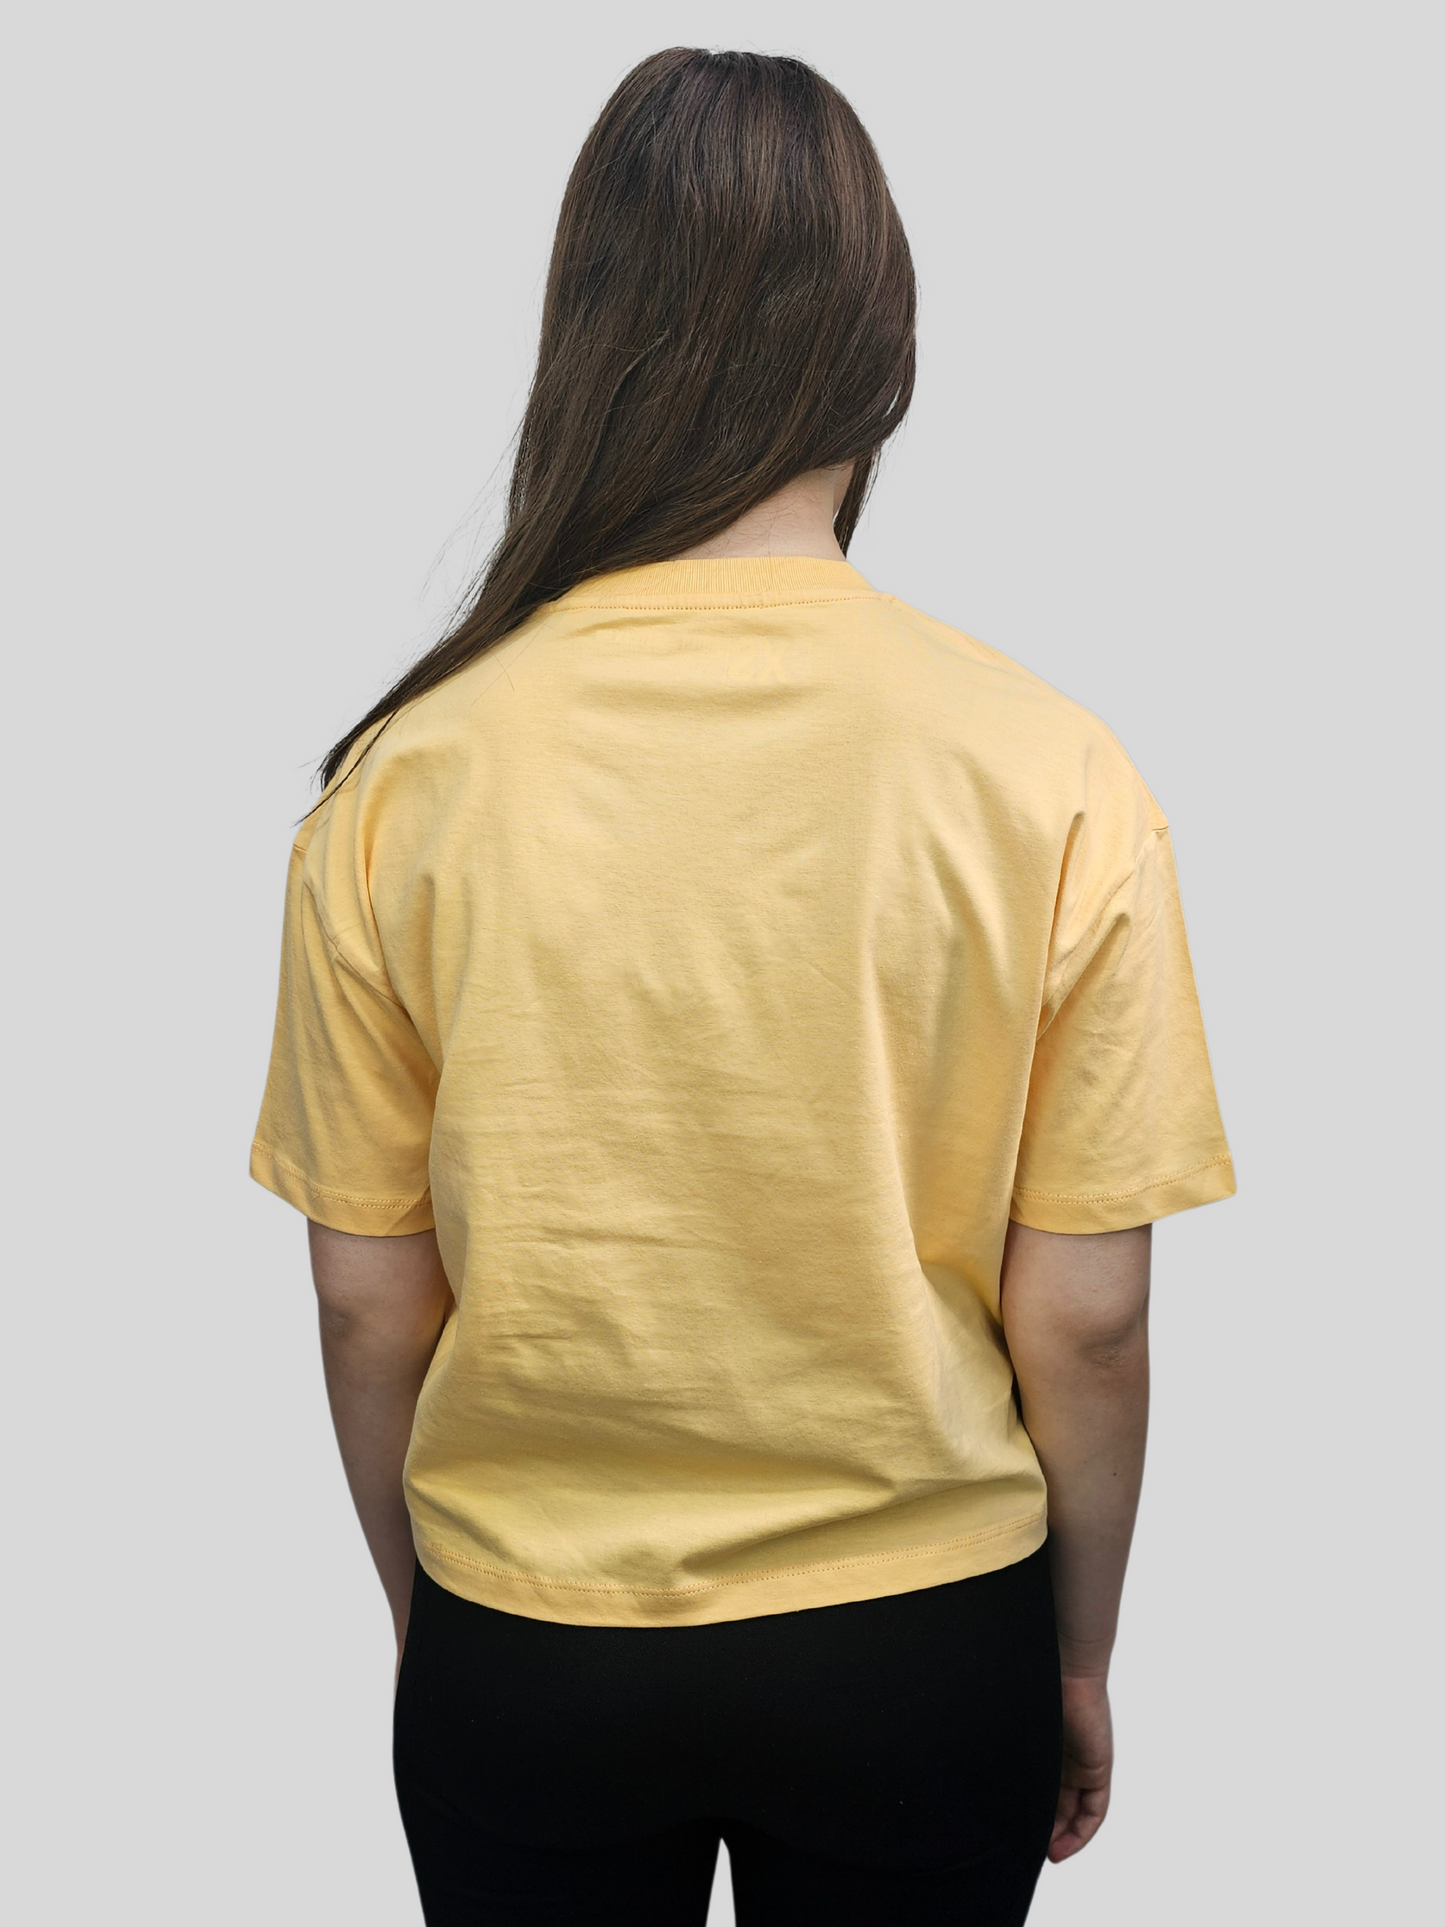 Tangerine Cropped Printed T Shirt